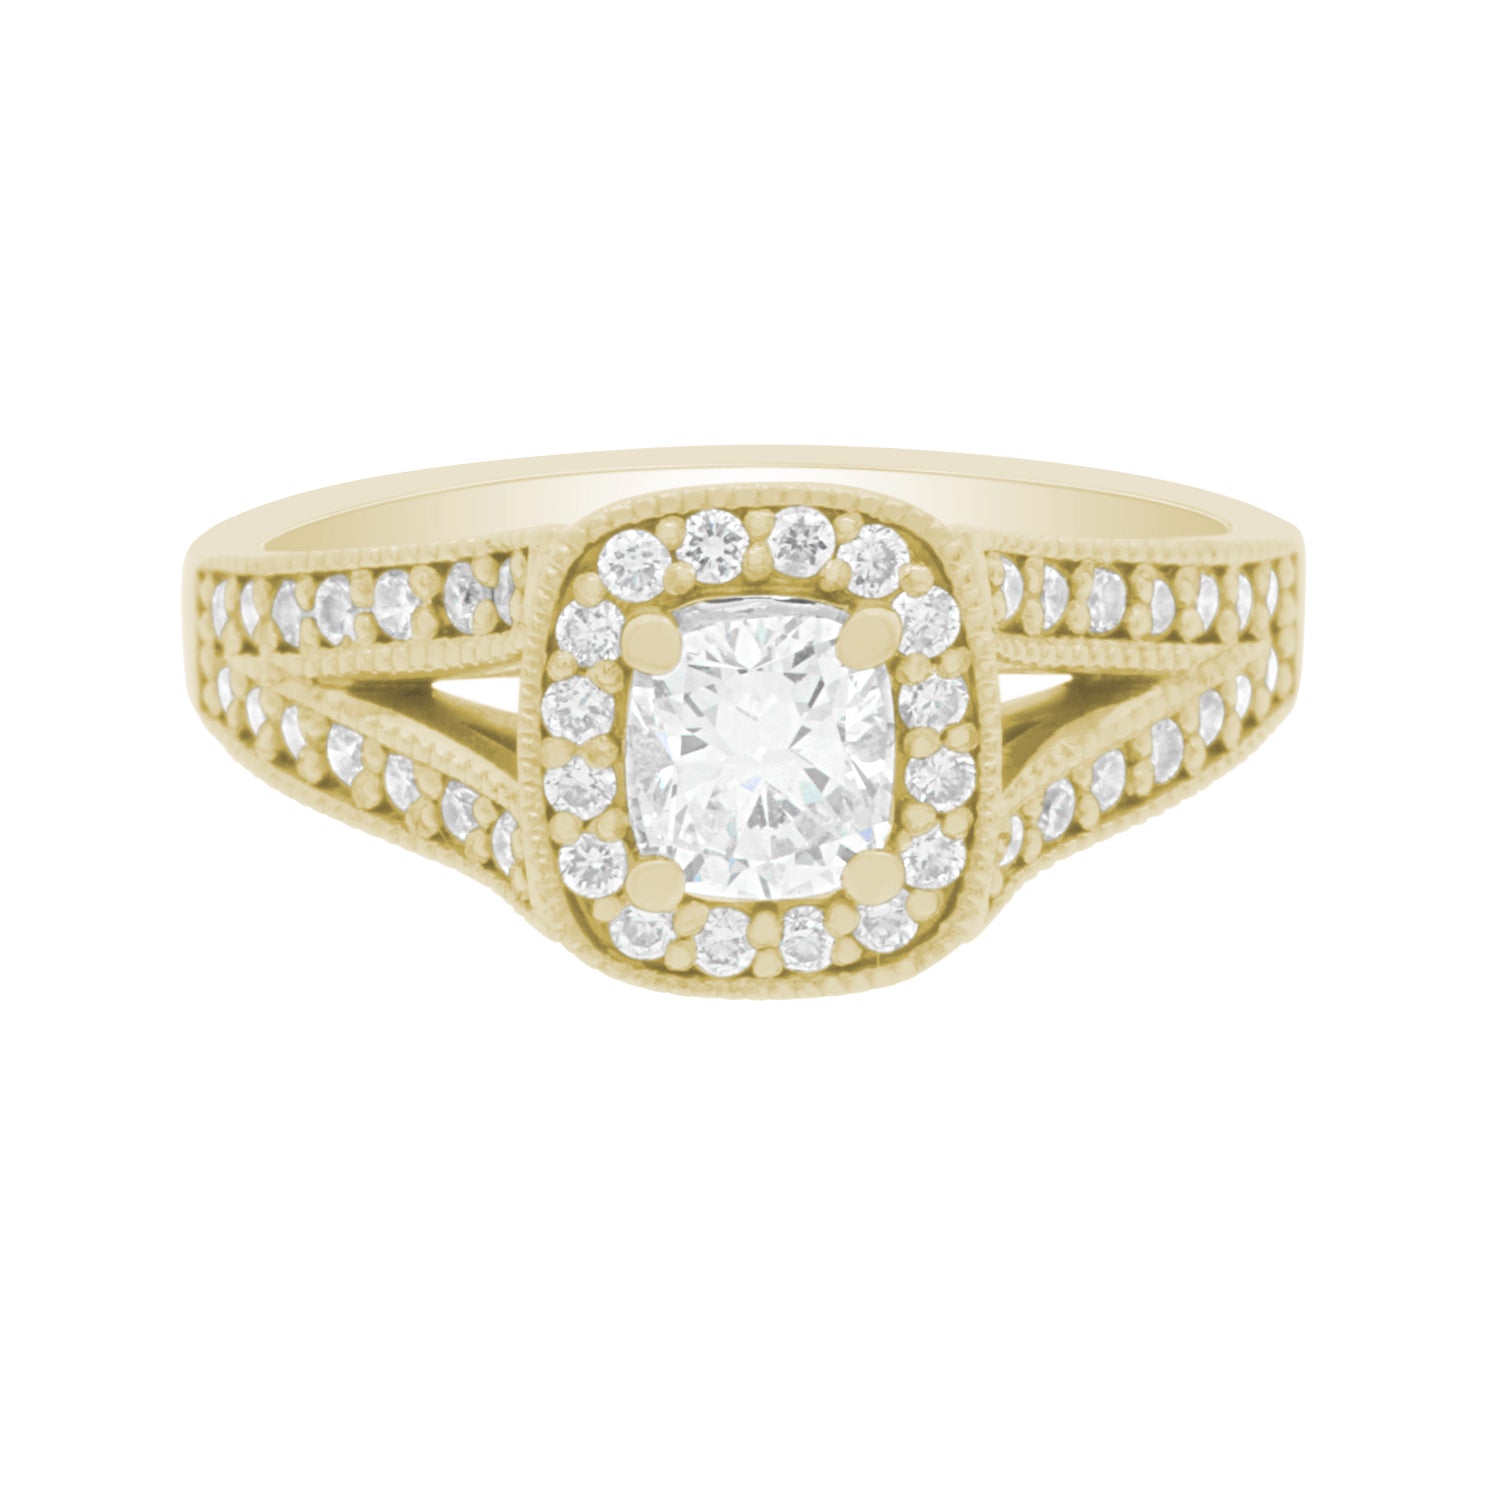 Cushion Halo Diamond Ring in yellow gold